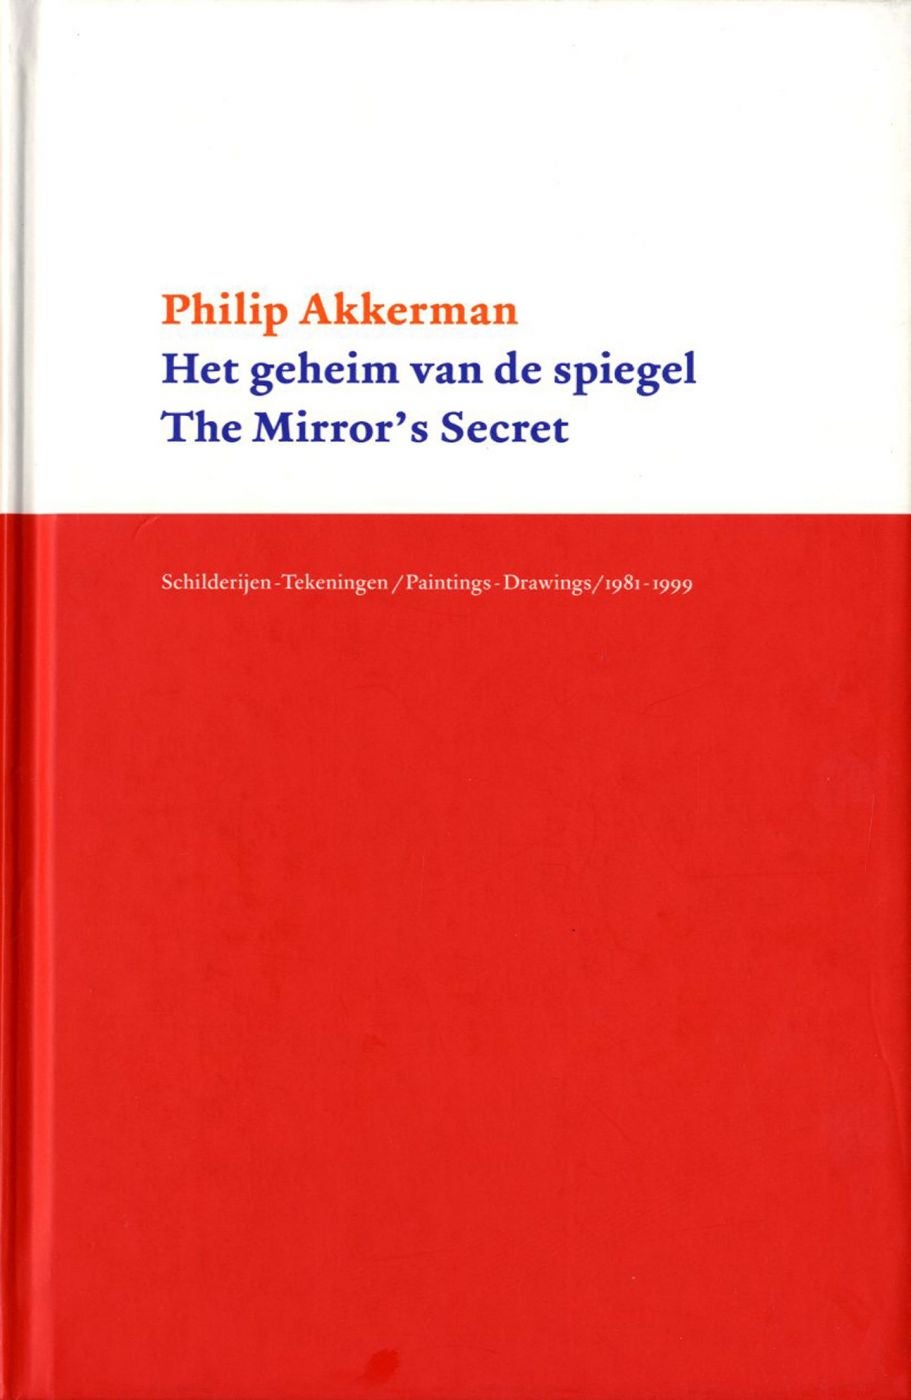 Philip Akkerman: The Mirror's Secret